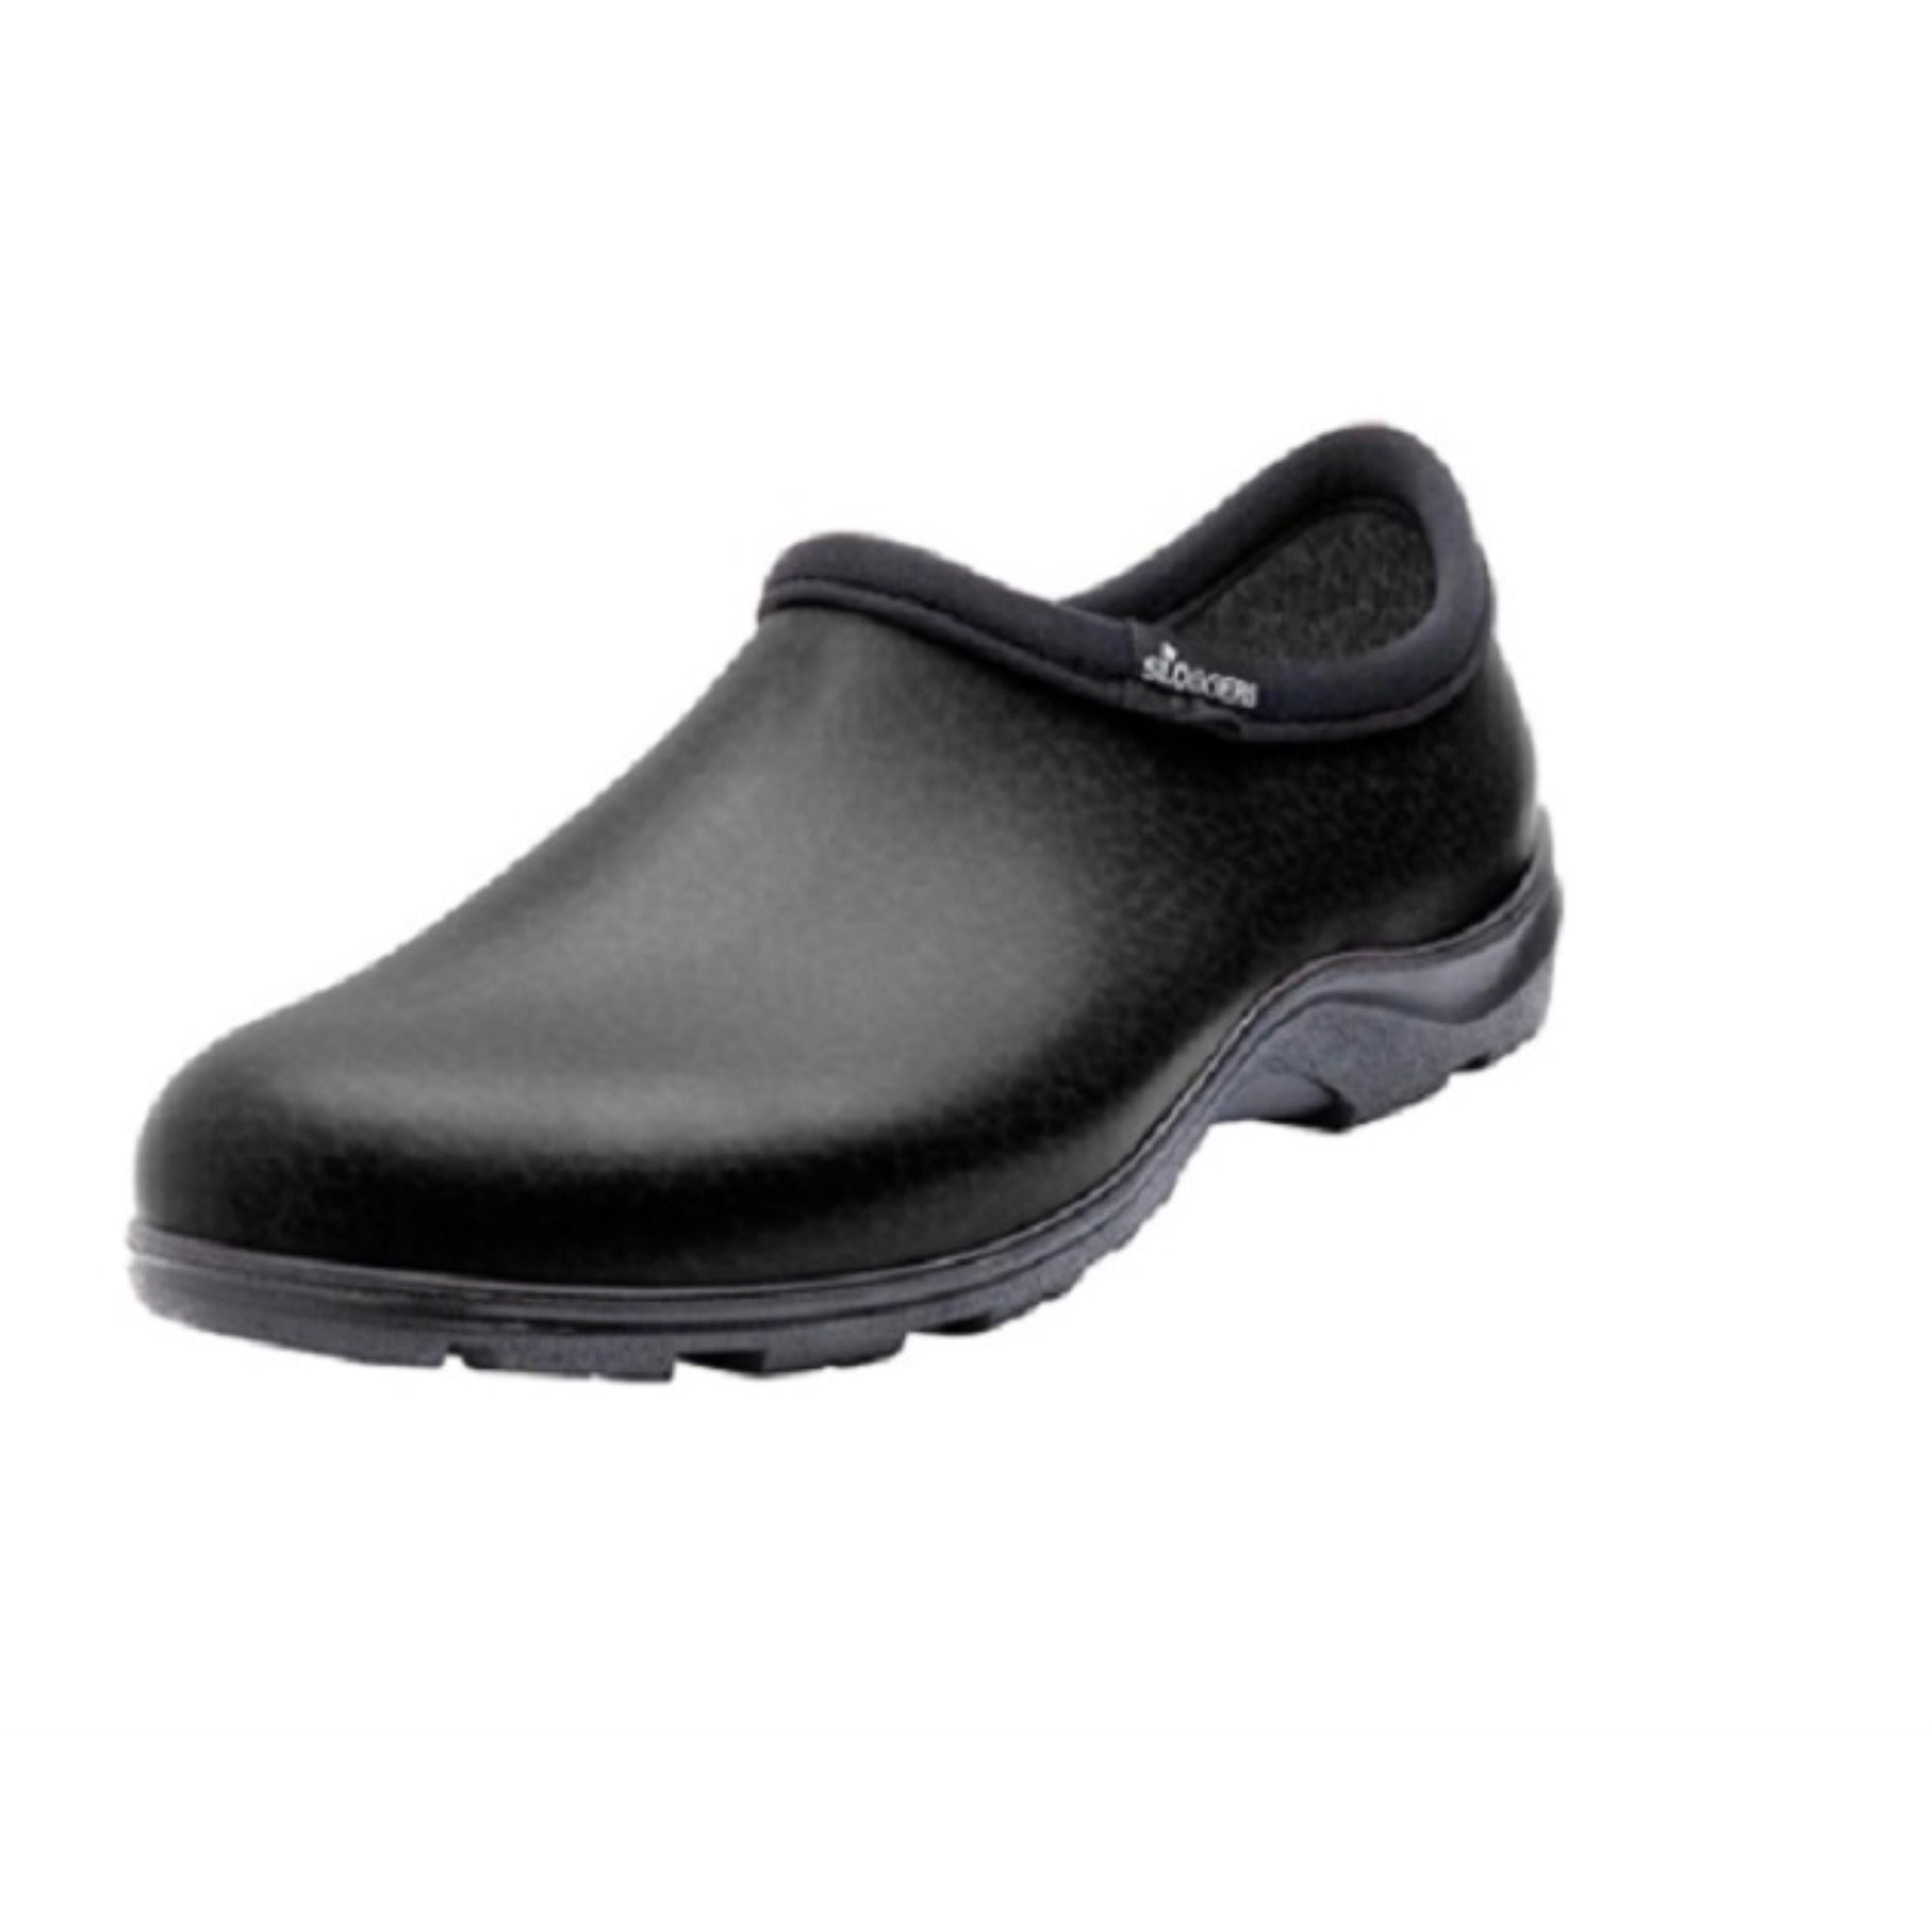 Sloggers Men's Rain and Garden Shoe, Black Leather Print, Size 10